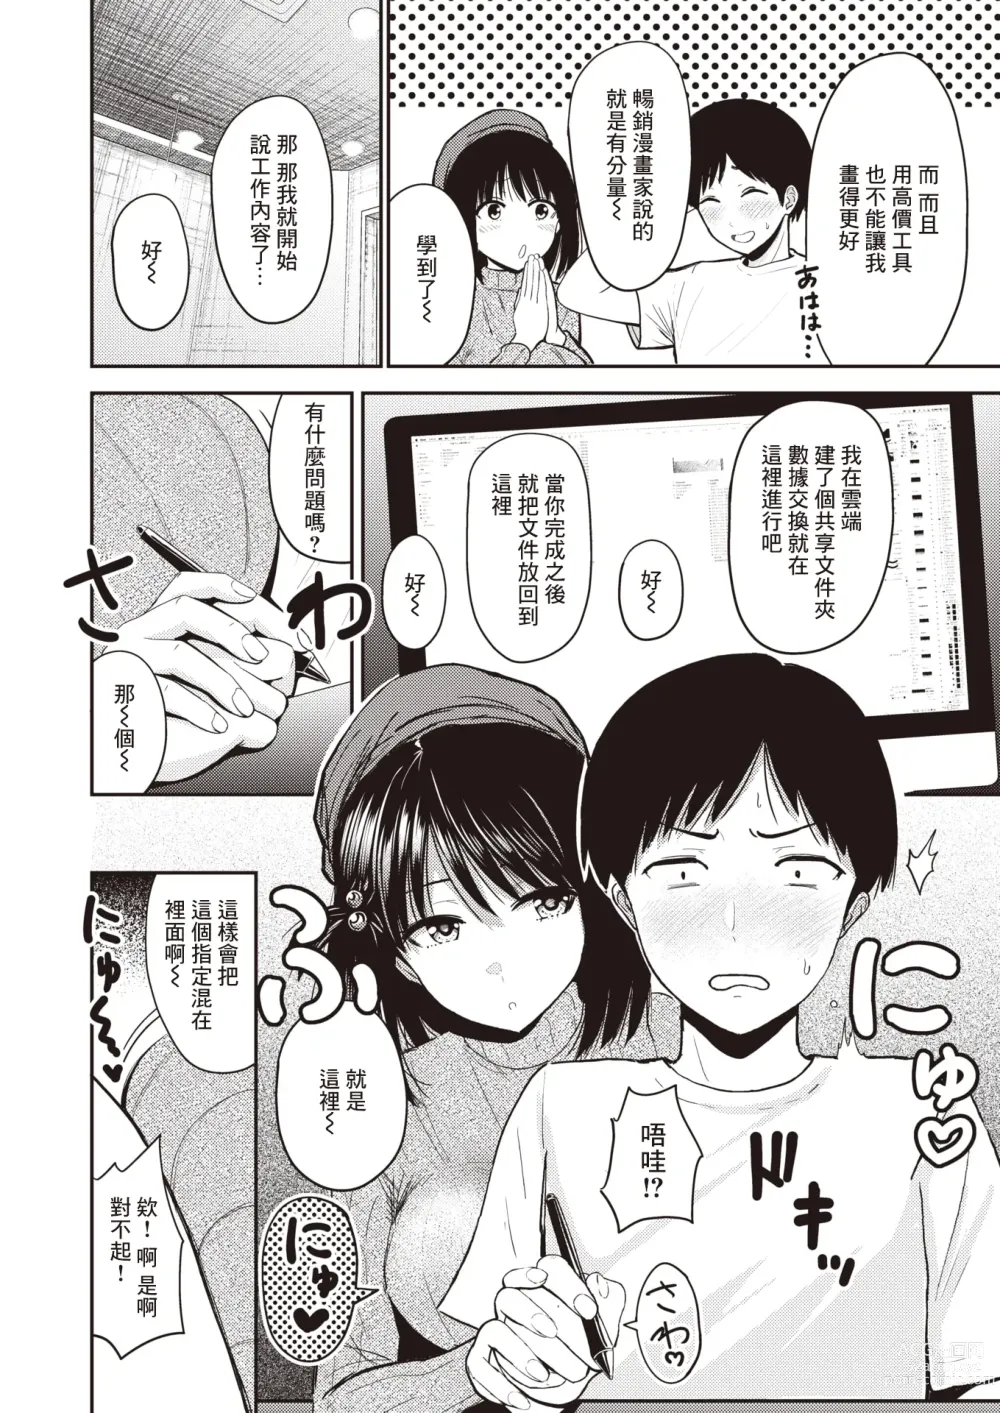 Page 4 of manga Bannou-gata!? Assistant